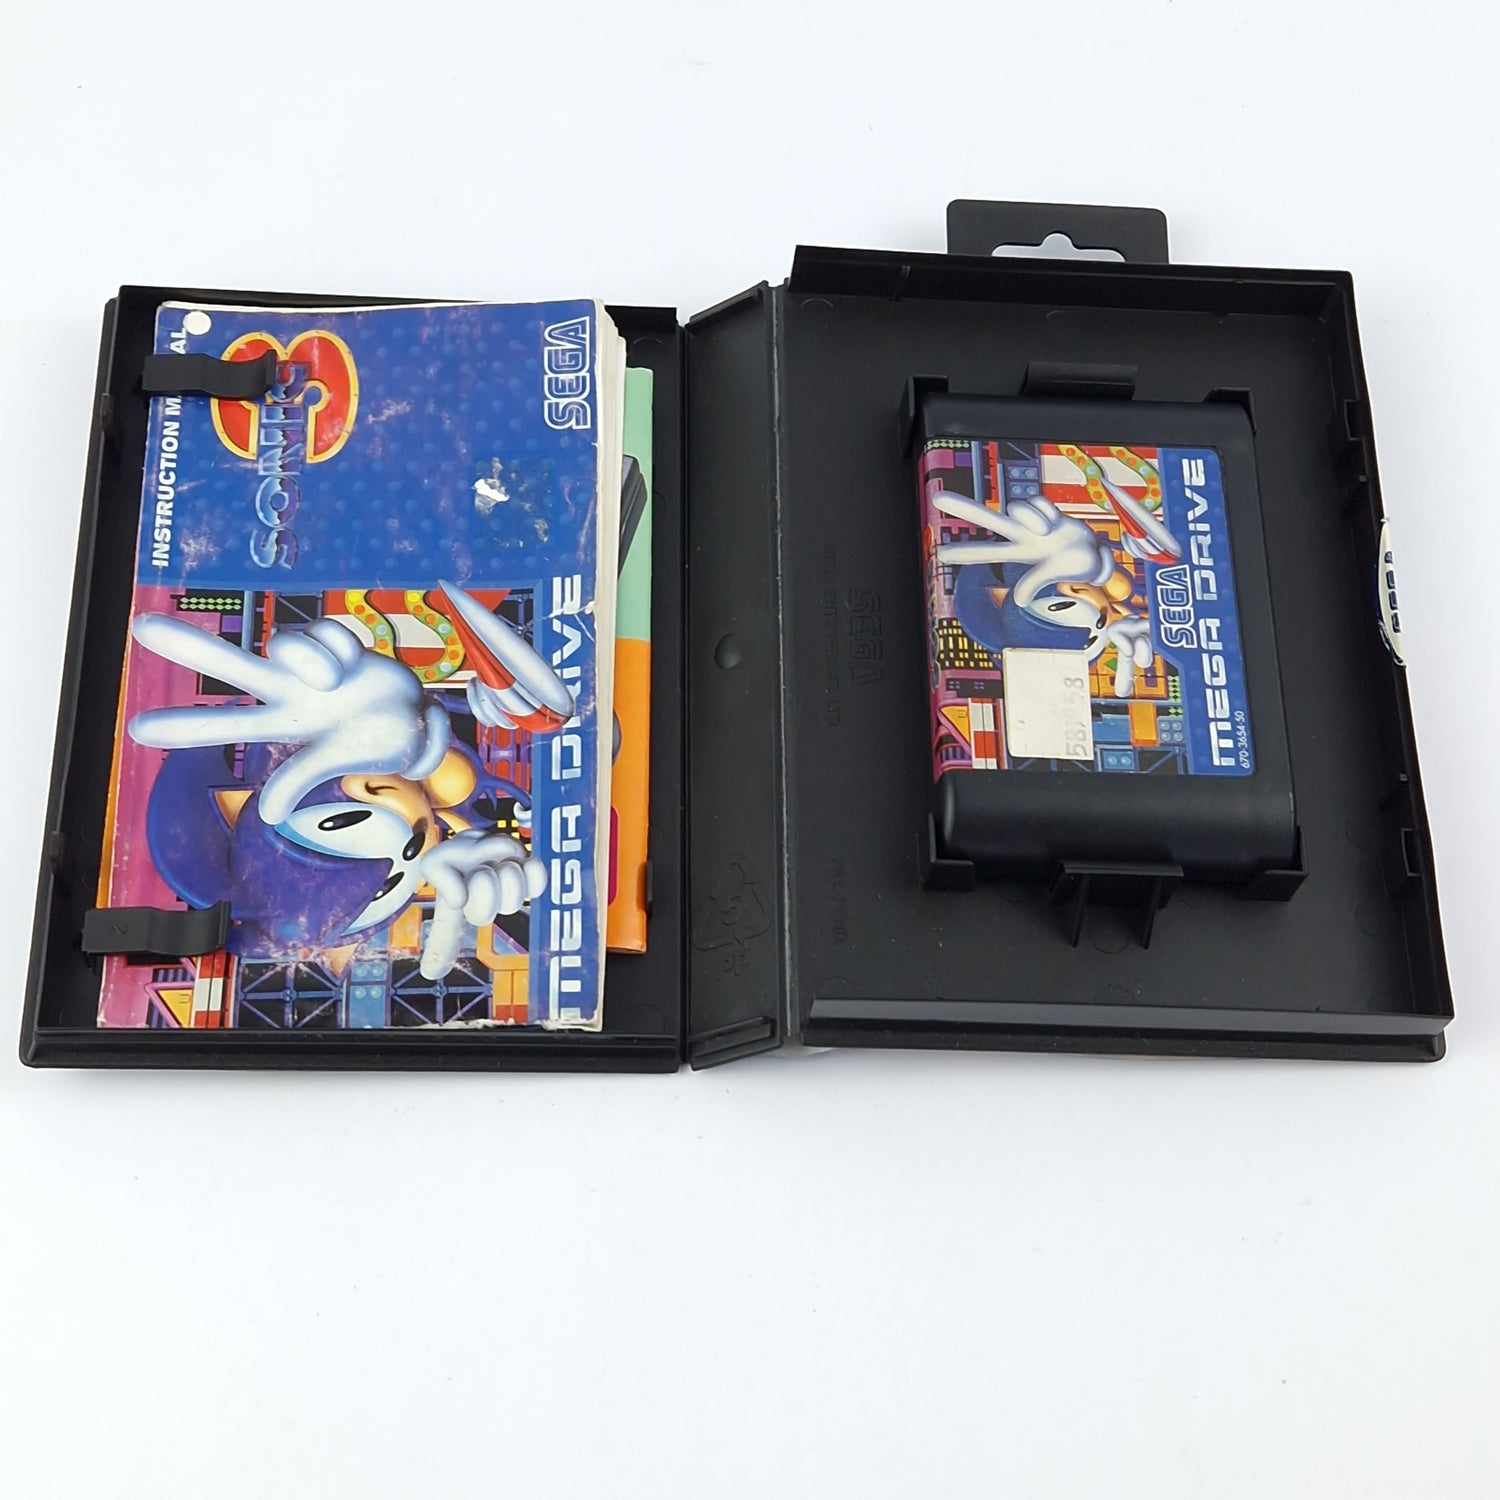 Sega Mega Drive Game: Sonic The Hedgehog 3 - Module Instructions OVP cib / PAL MD